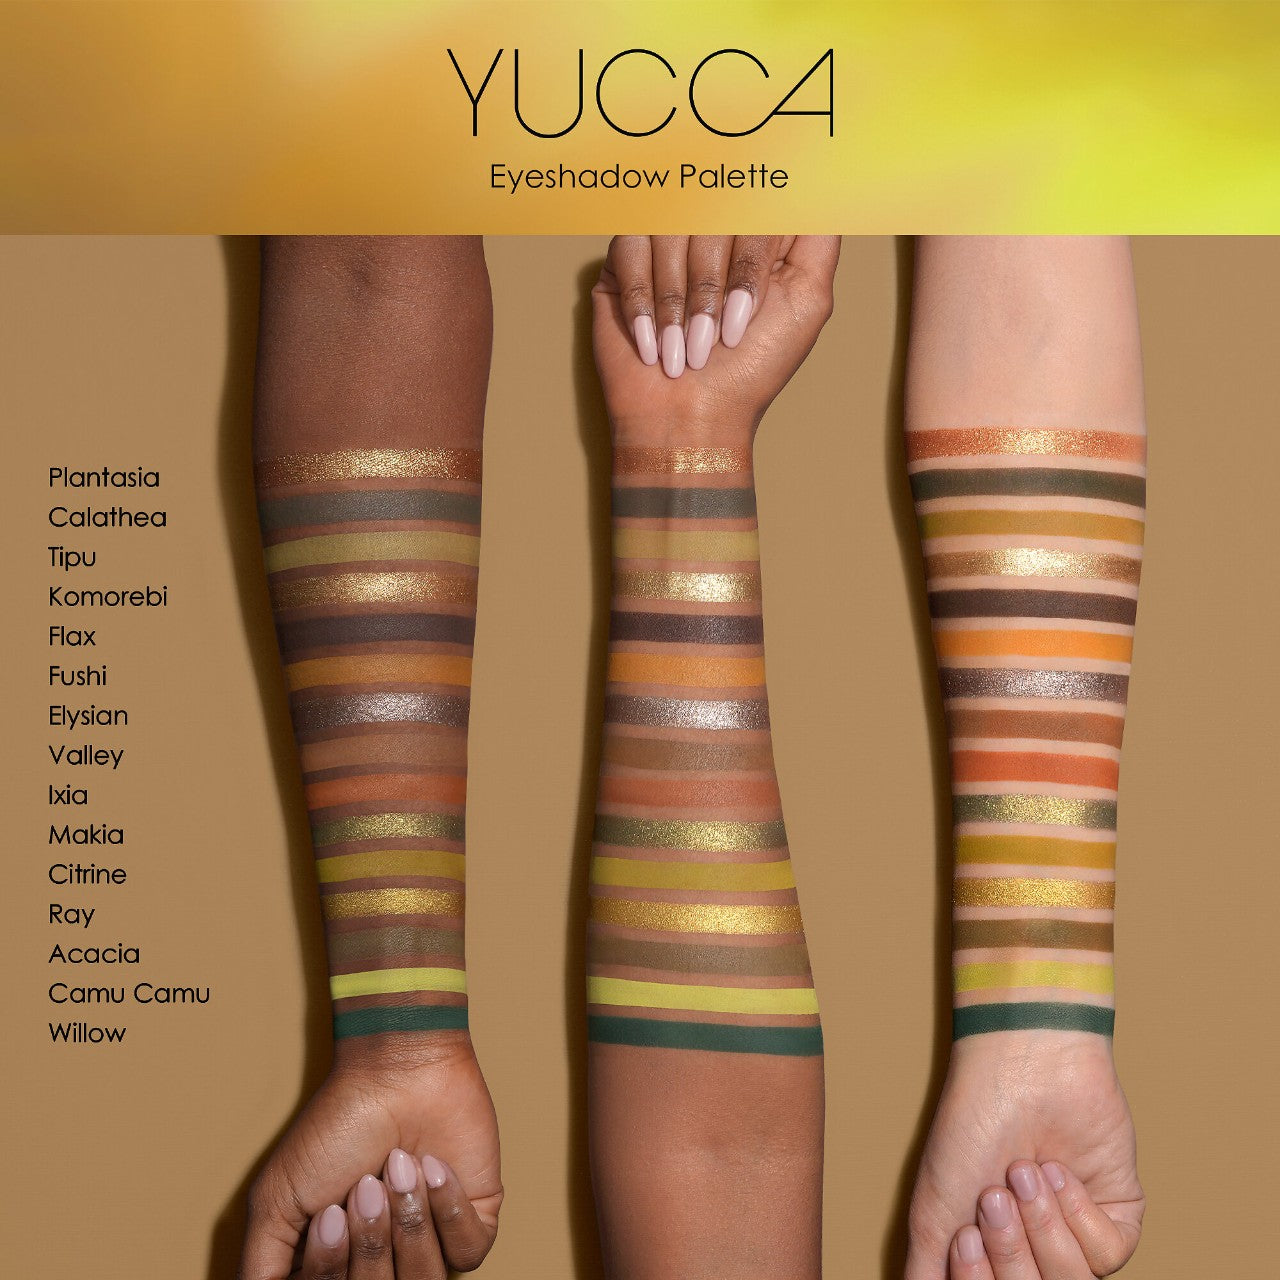 Yucca Palette